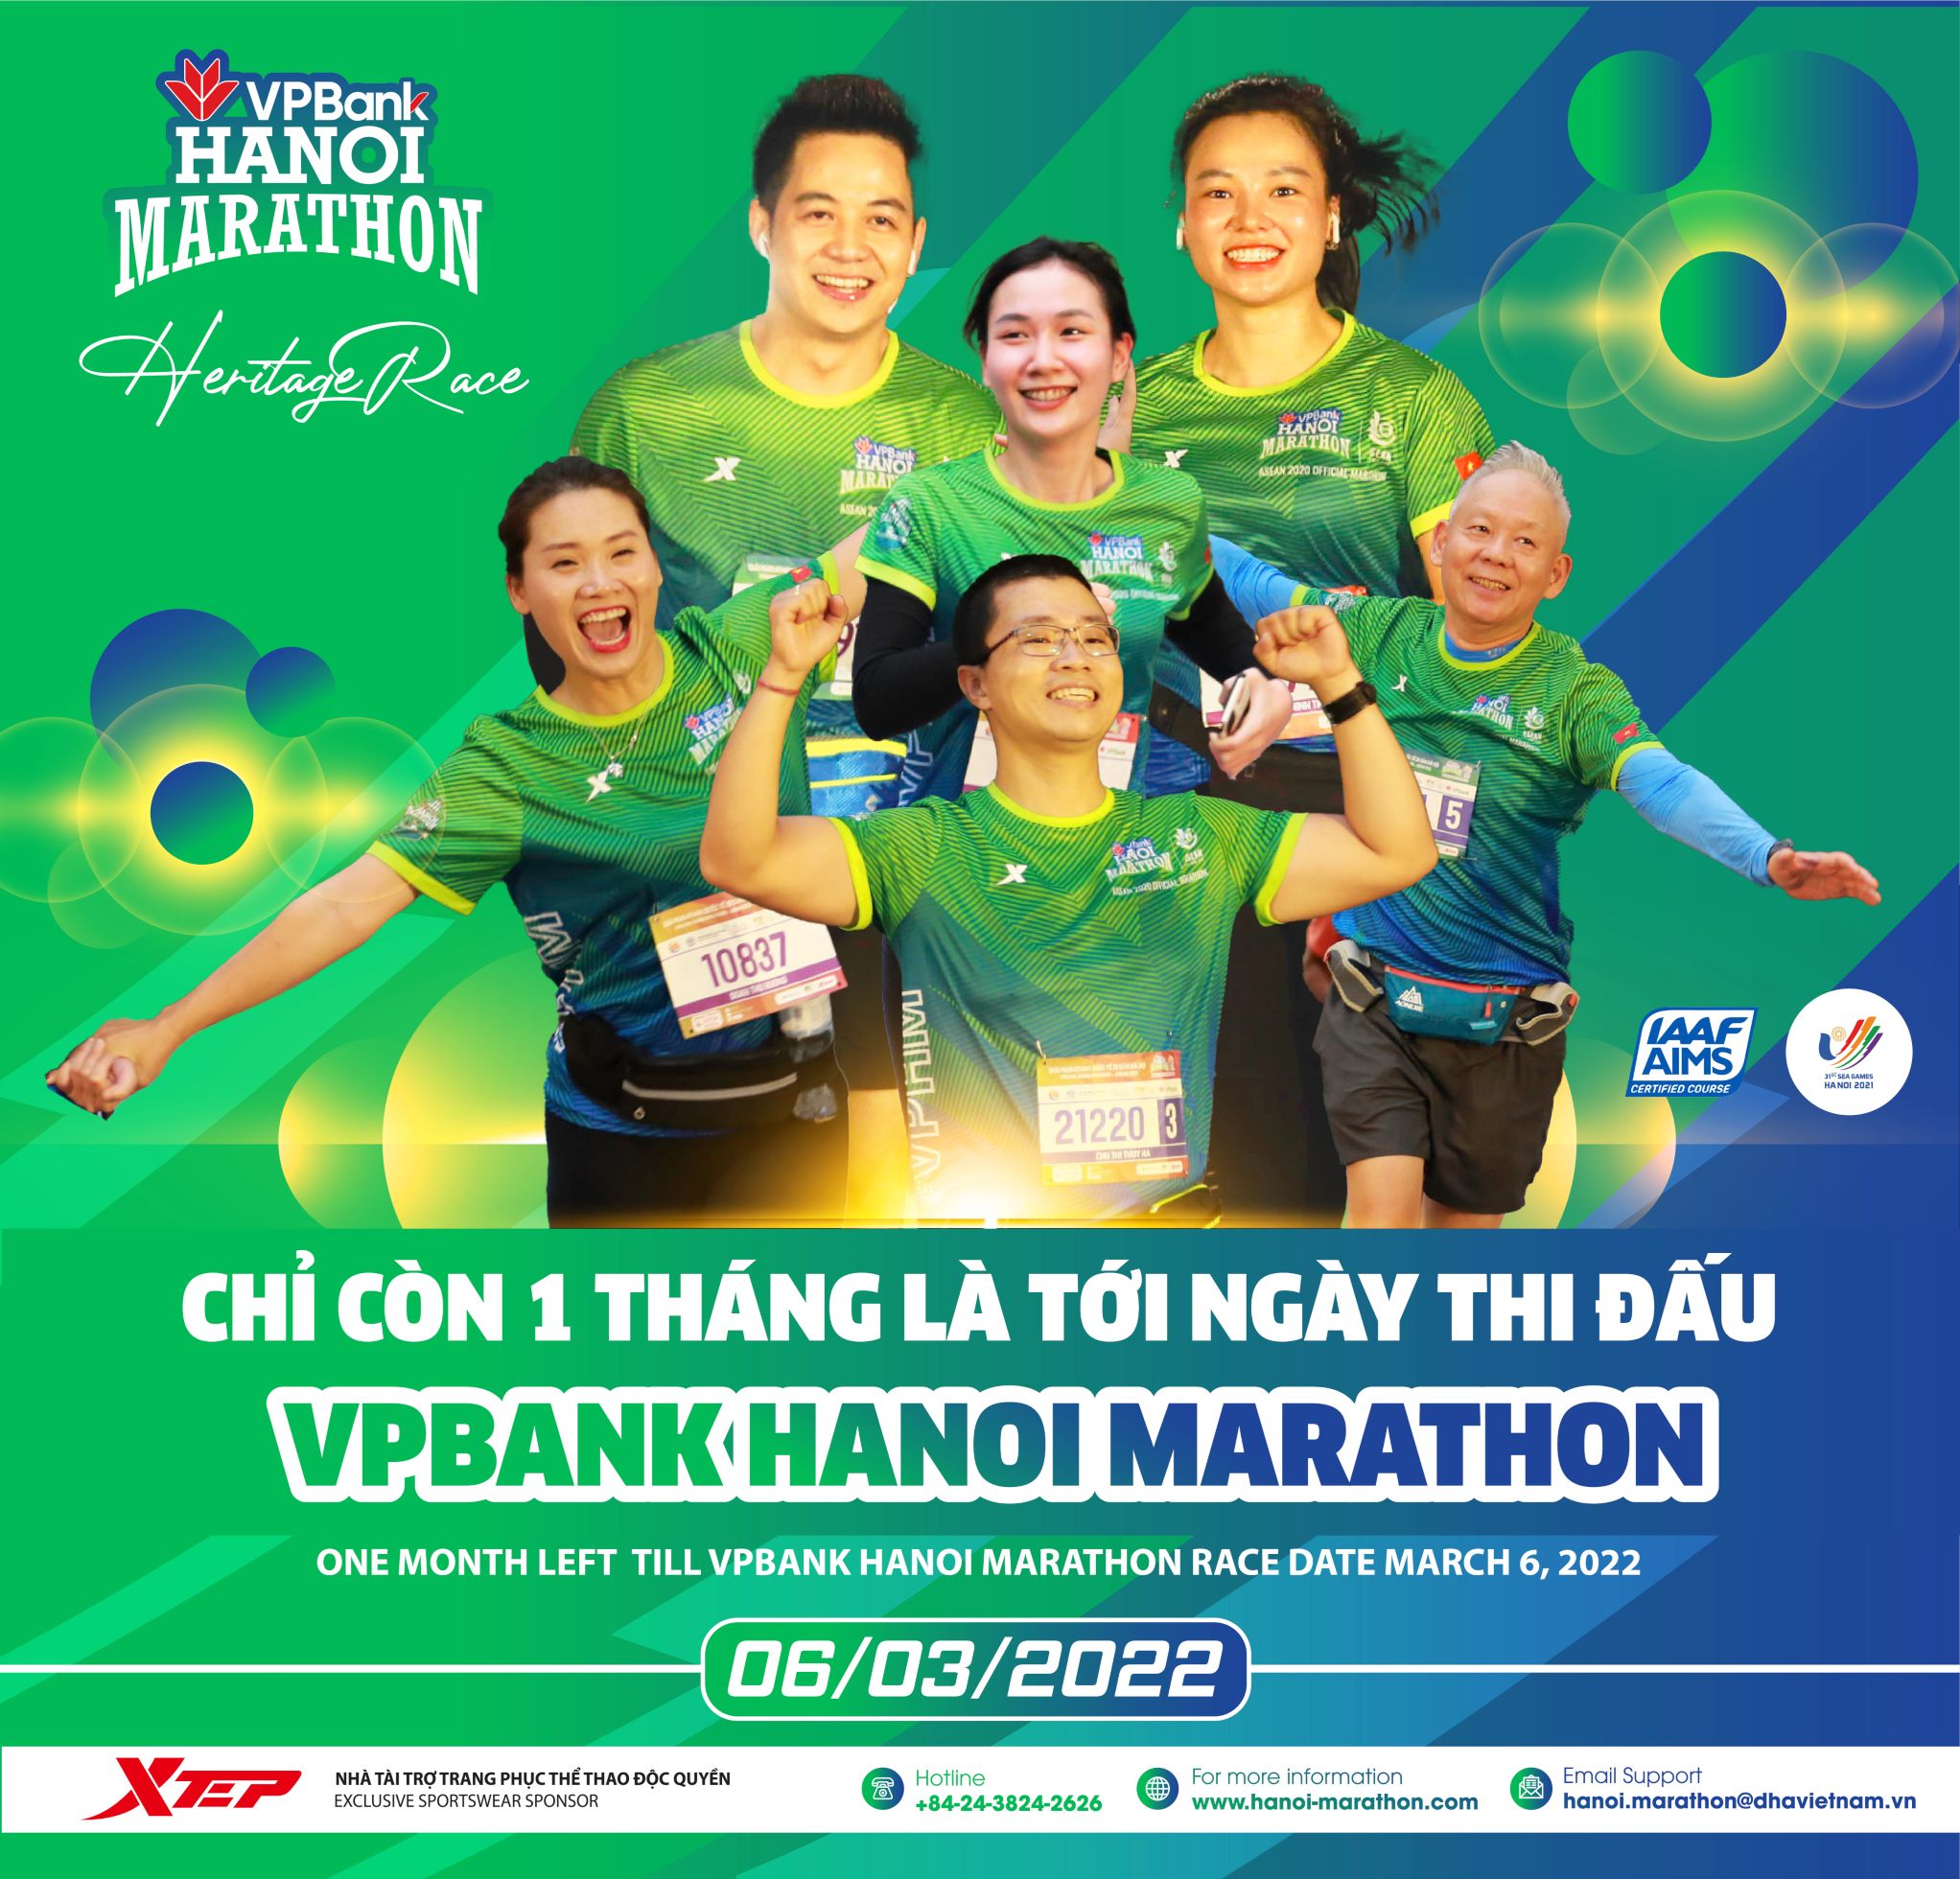 One Month Left To VPBank Hanoi Marathon Race Date March 6, 2022